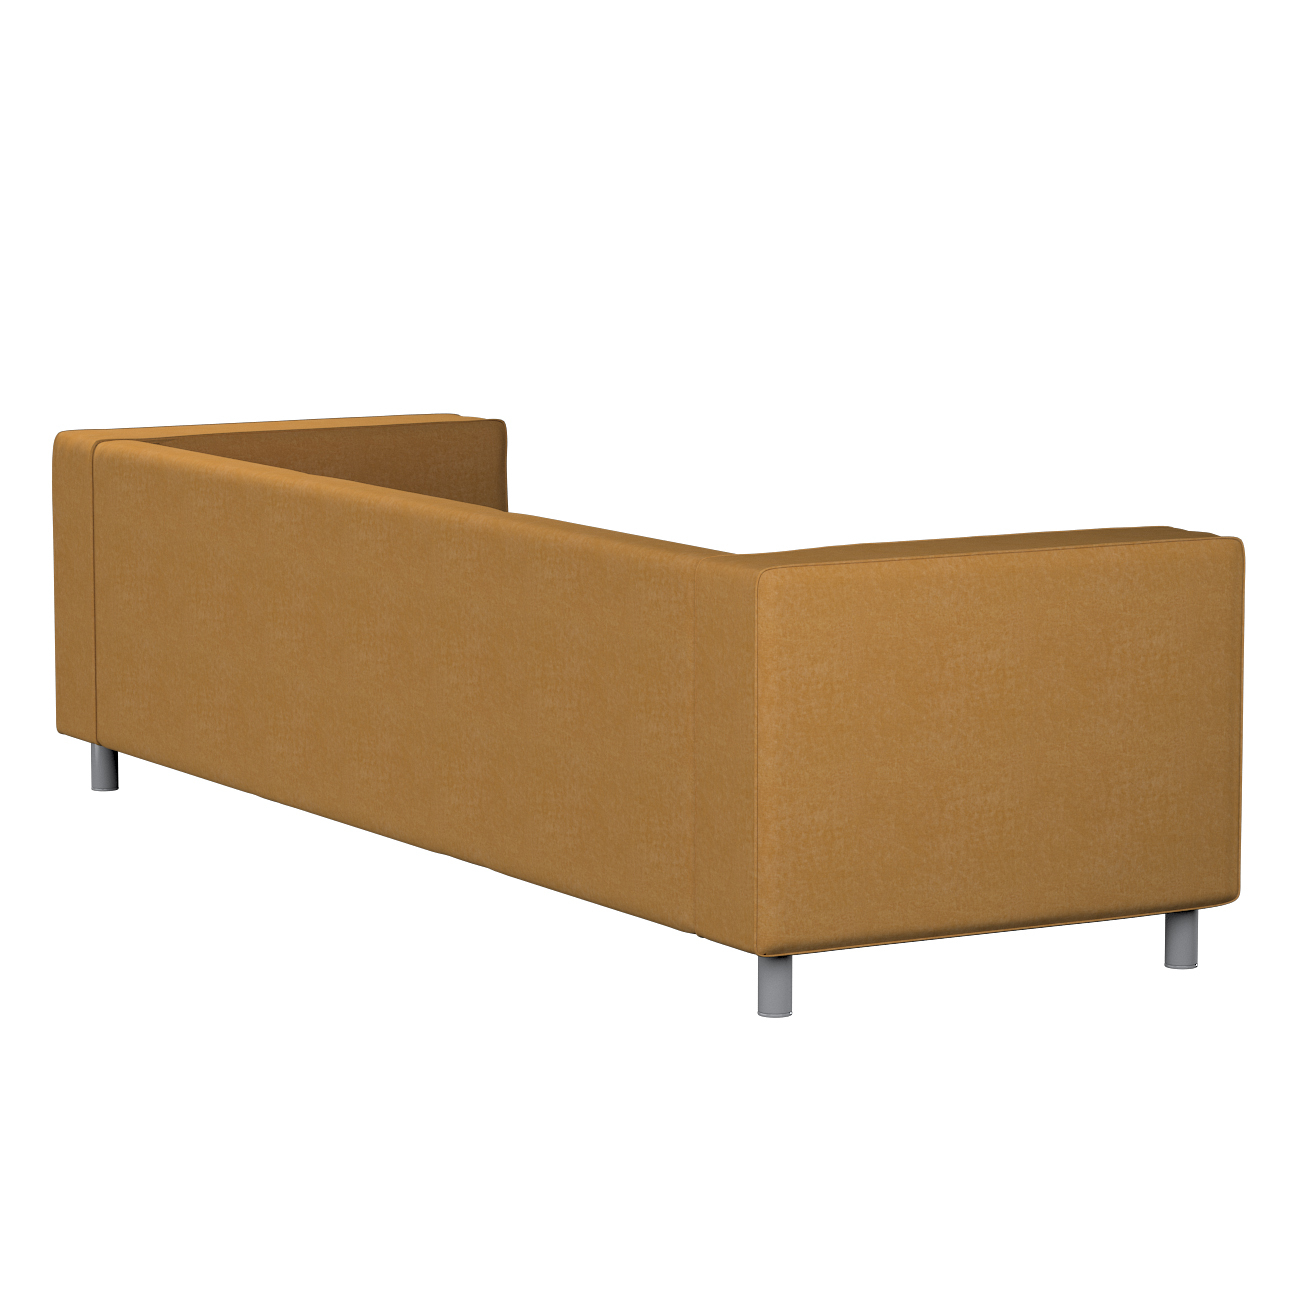 Bezug für Klippan 4-Sitzer Sofa, honiggelb, Bezug für Klippan 4-Sitzer, Che günstig online kaufen